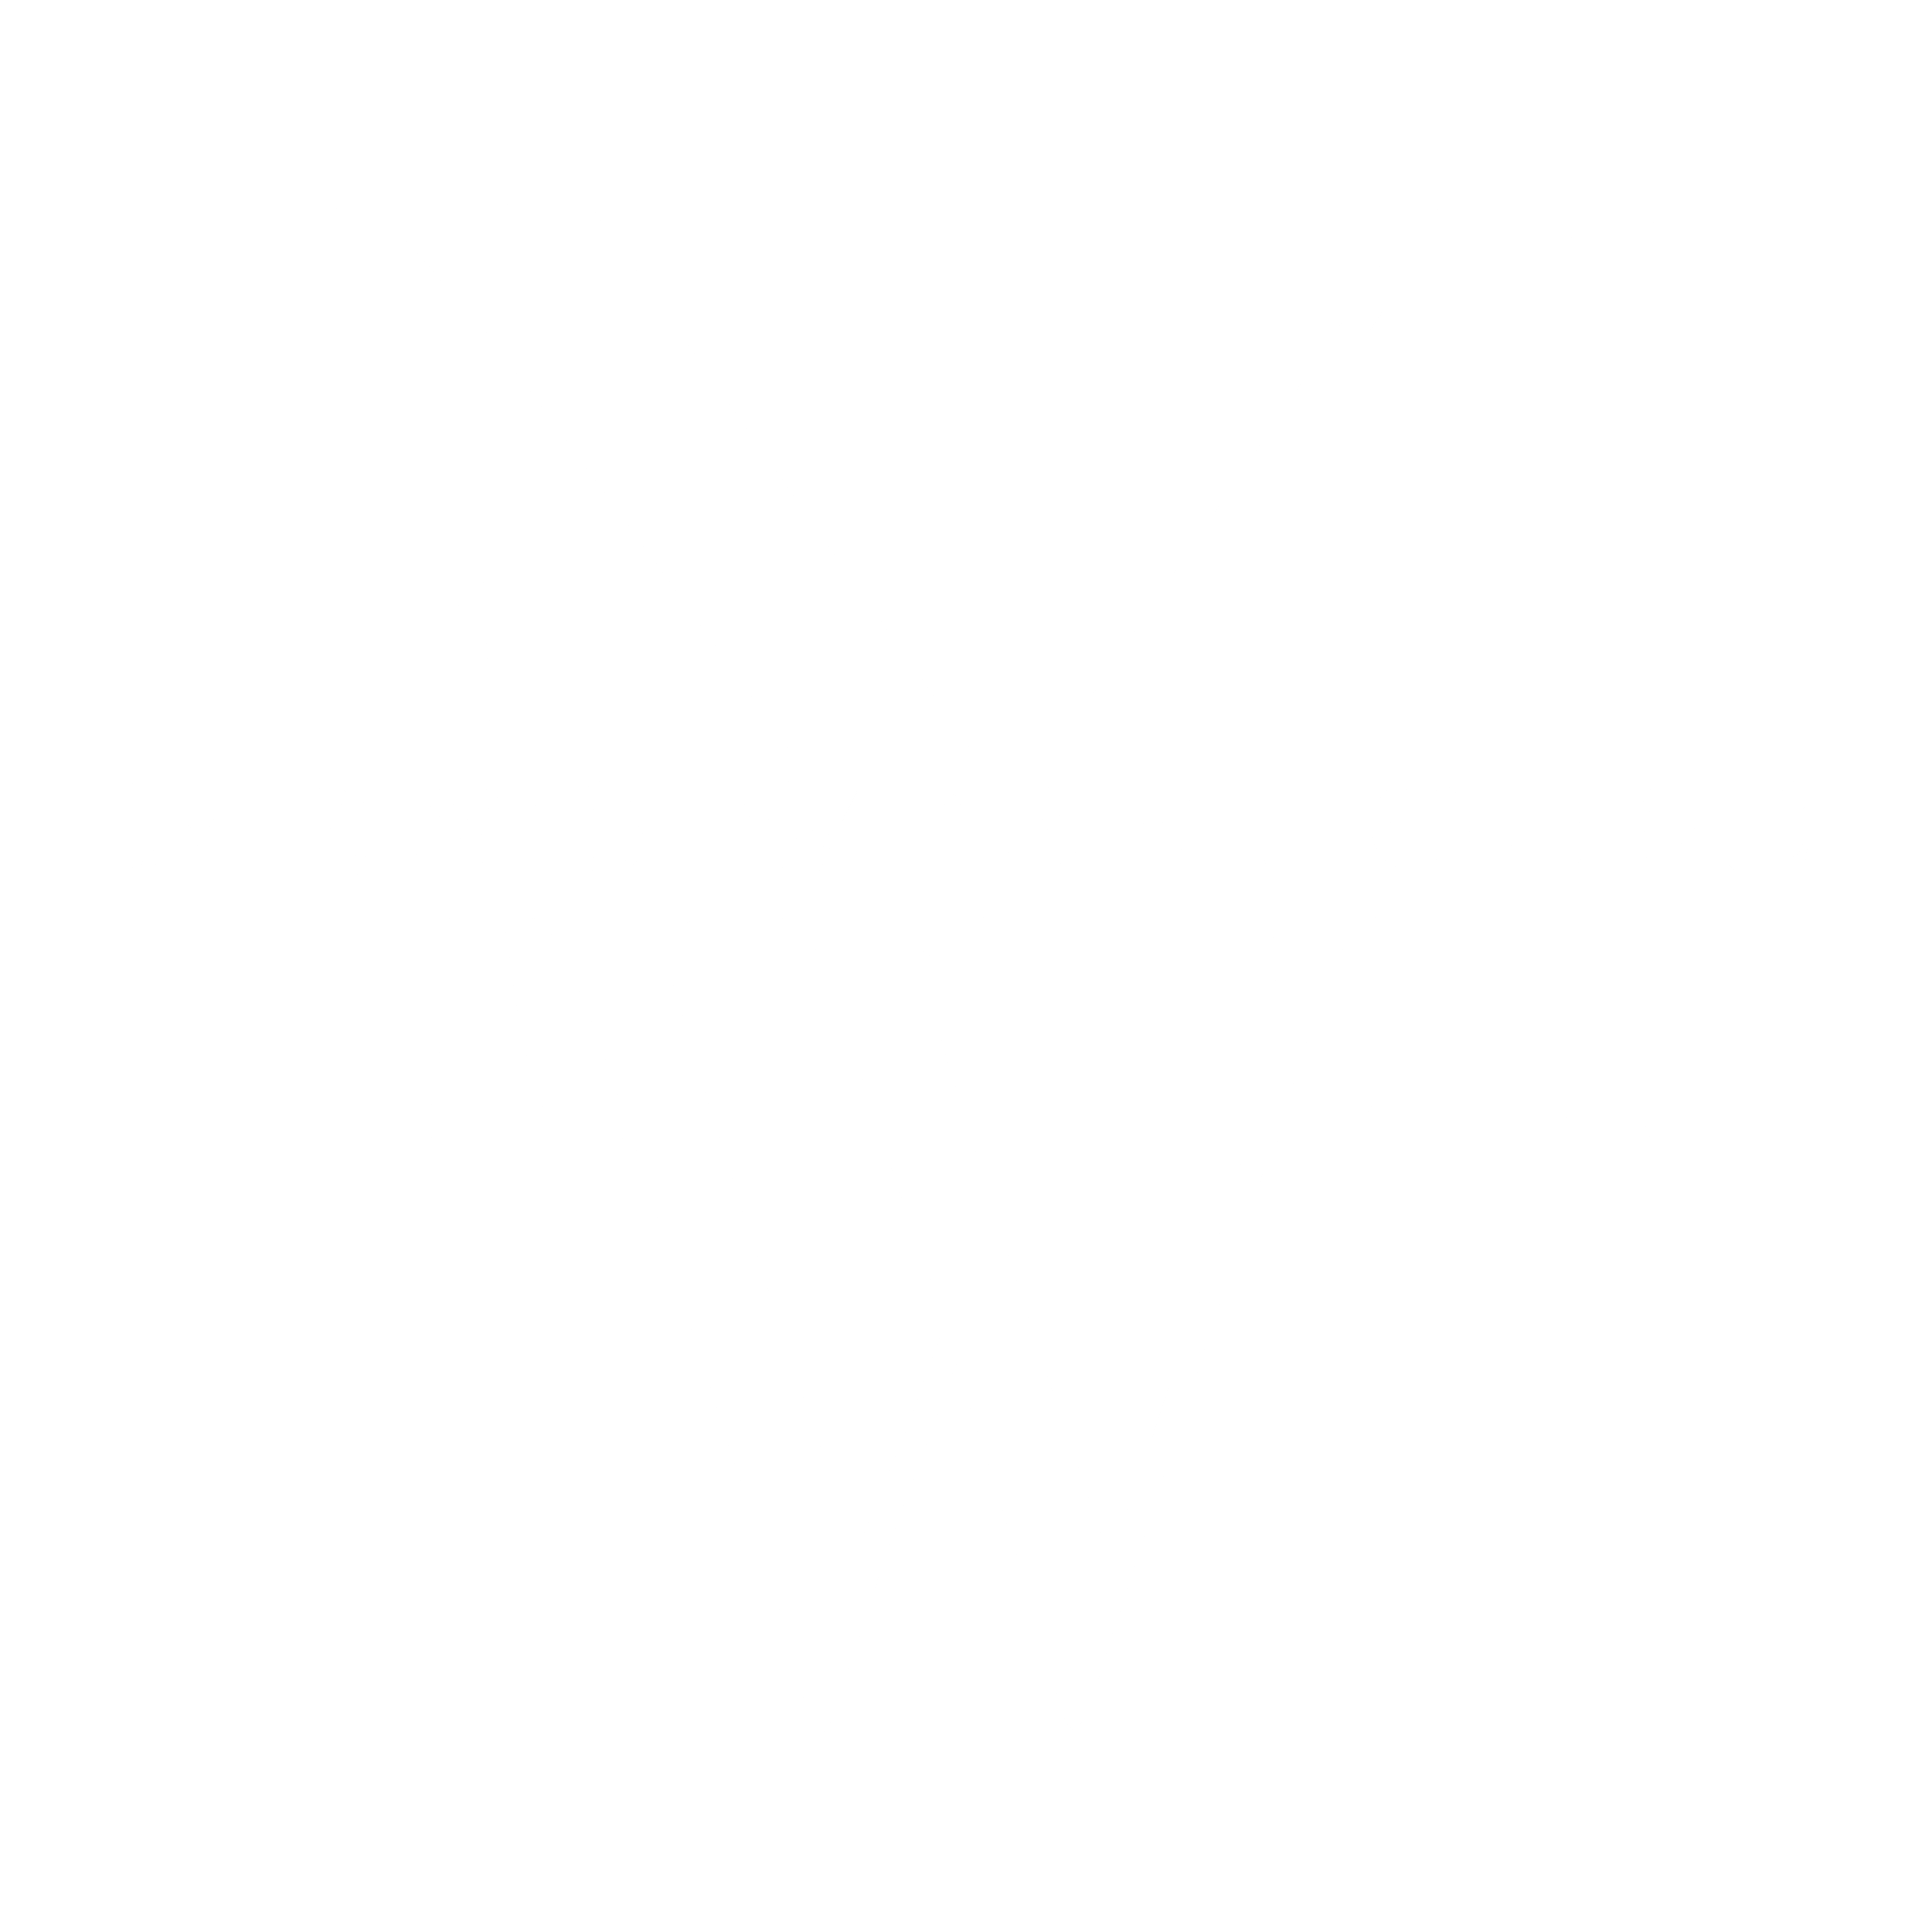 Men's Wearhouse Logo - Men's Wearhouse Logo PNG Transparent & SVG Vector